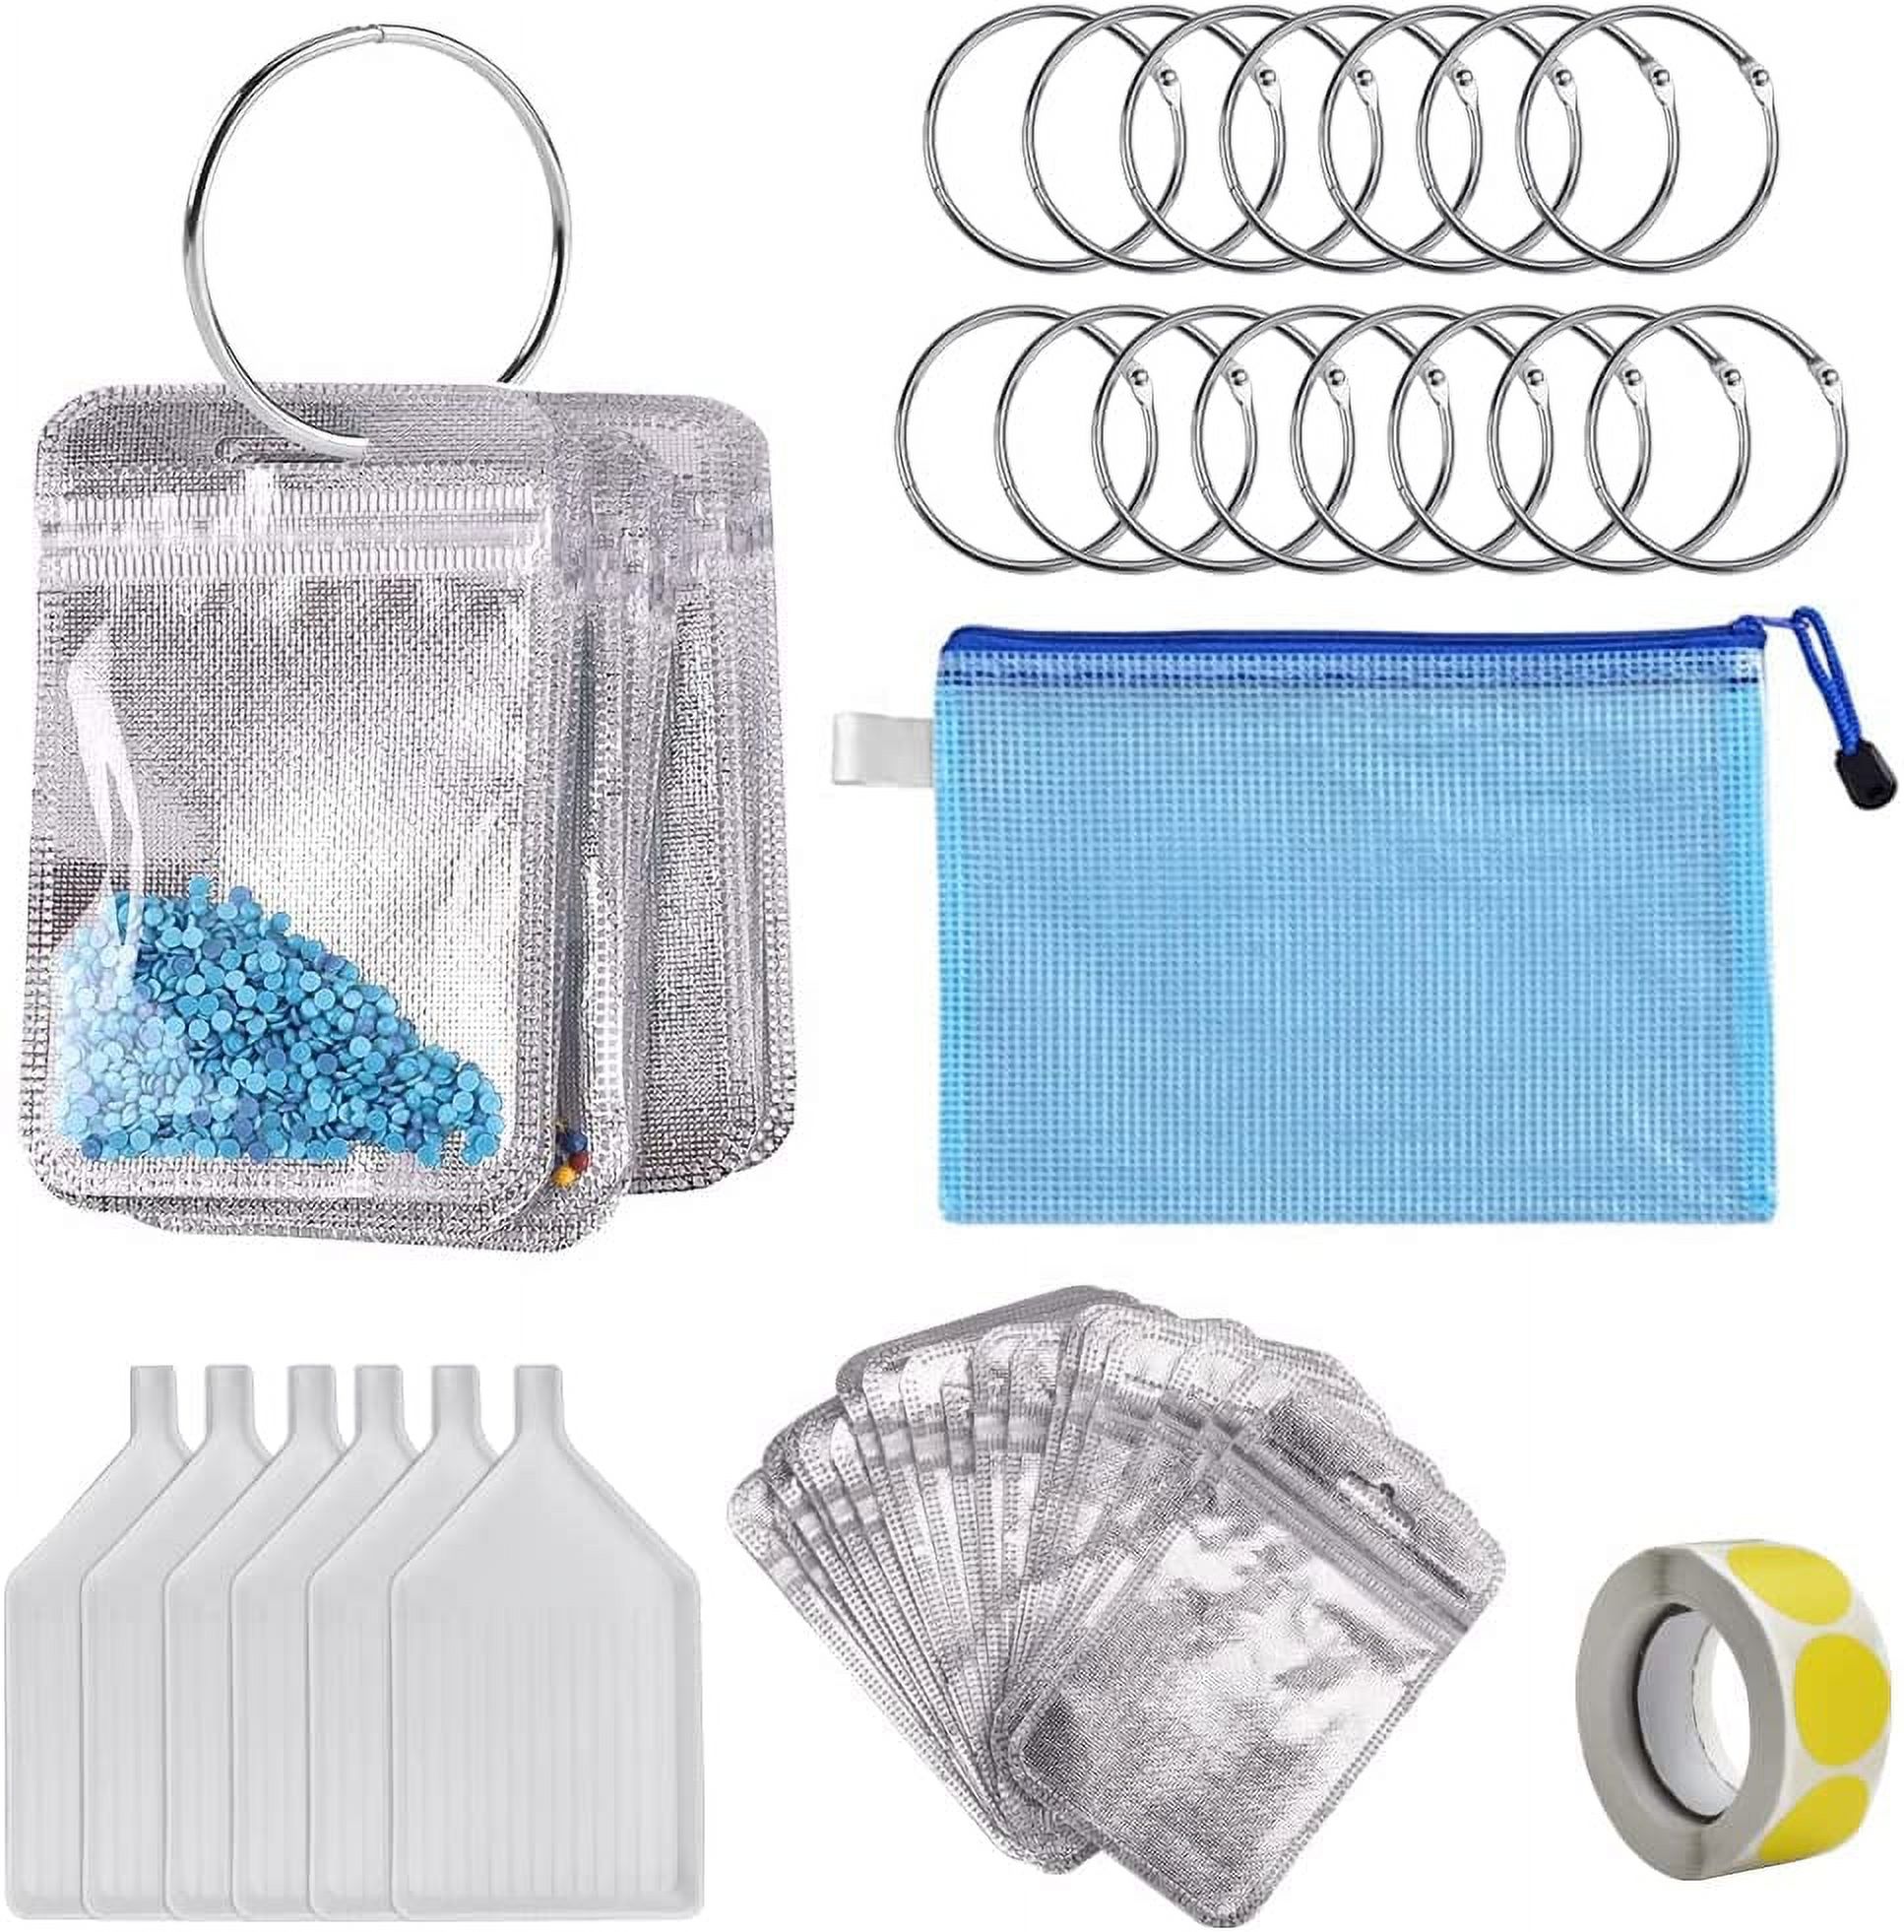 LYTIVAGEN Diamond Painting Accessories Kit Including 100Pcs Diamond  Painting Ziplock Bags 10Pcs Round Binding Rings 6Pcs Plastic Tray 1 Sticky  Dots